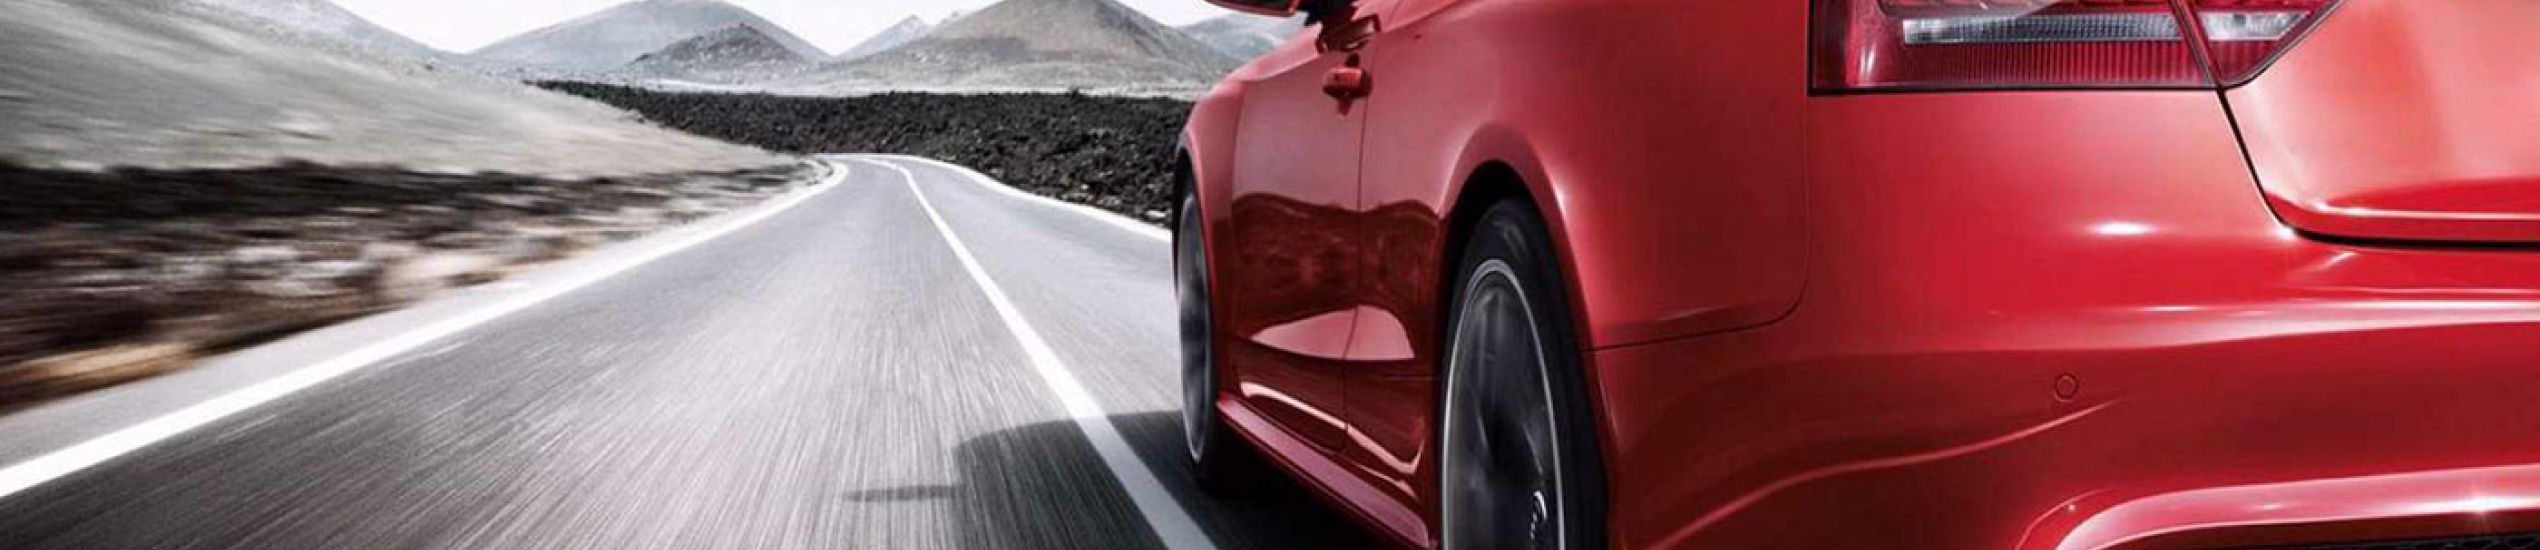 Rode Audi RS-5